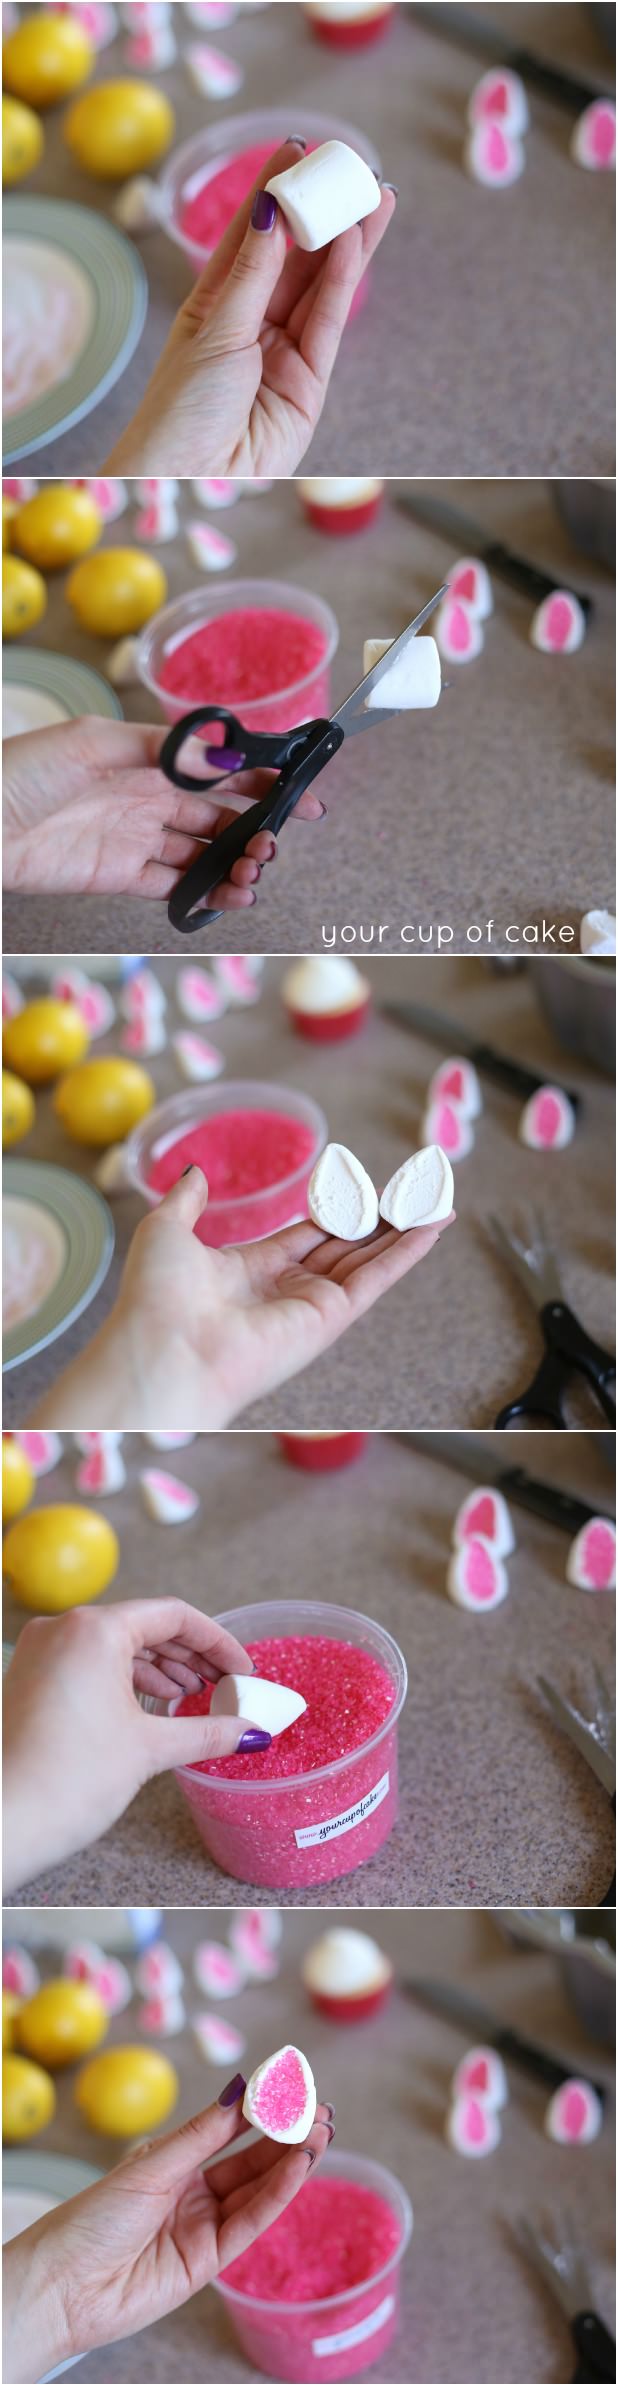 How to make Homemade Marshmallow Bunnies